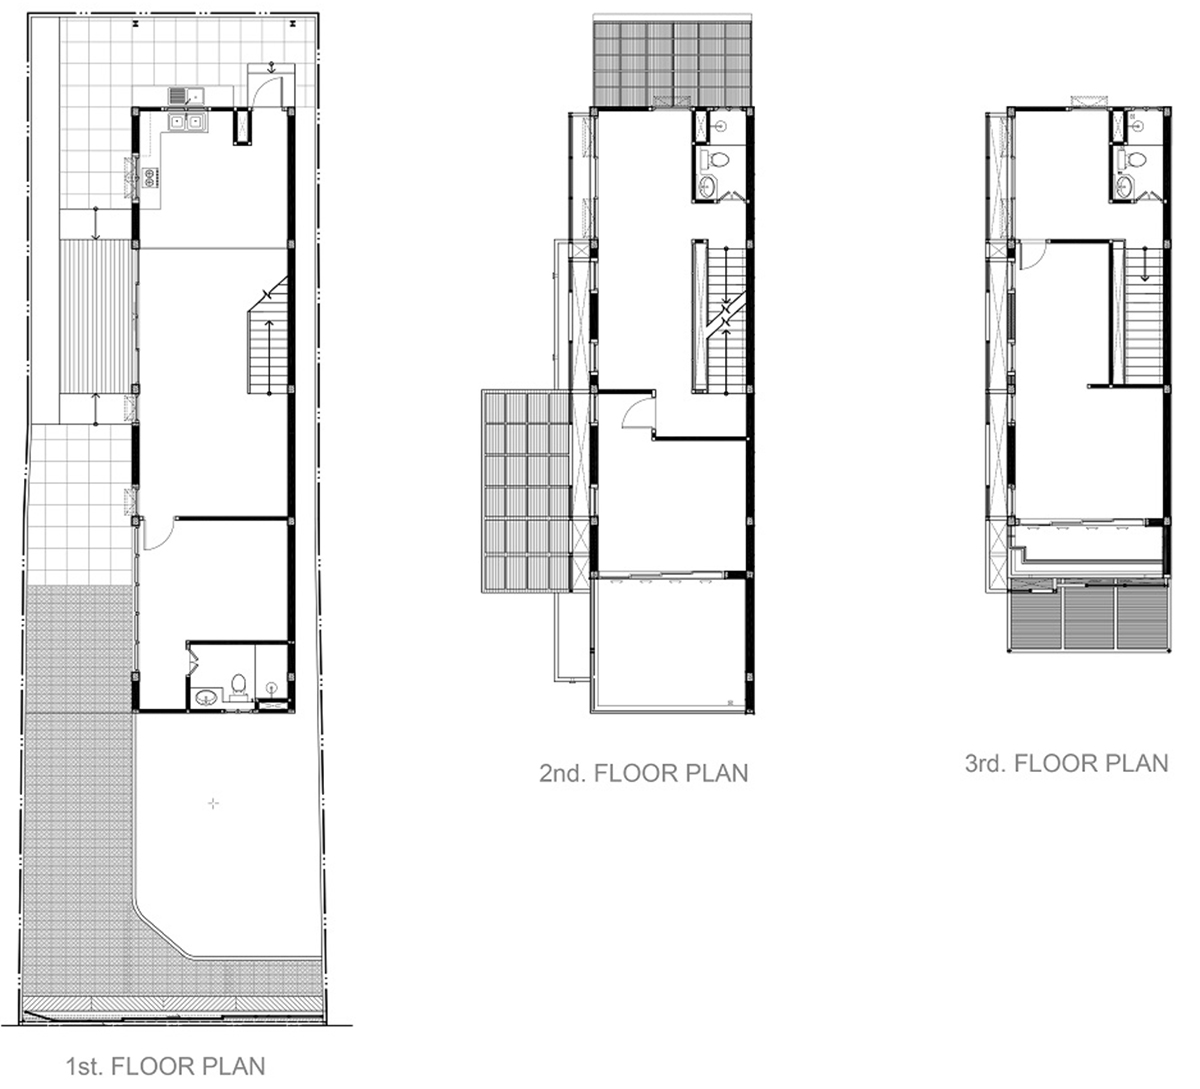 PM House | Office Architect9kampanad., Ltd.